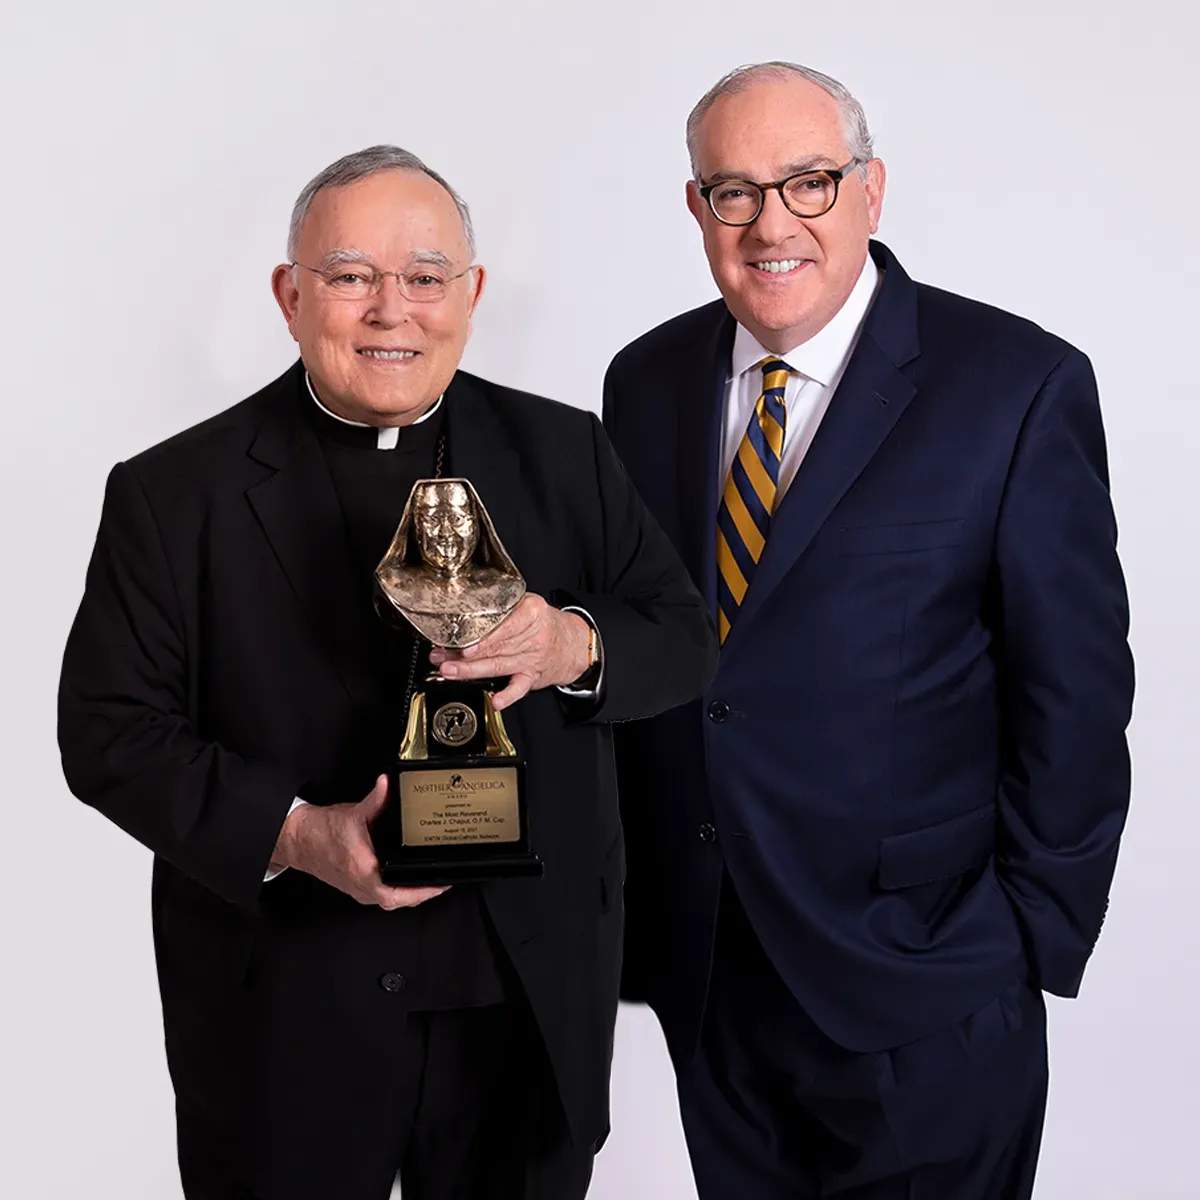 Mother Angelica Award winner Archbishop Charles J. Chaput (left) with EWTN CEO Michael P. Warsaw. EWTN